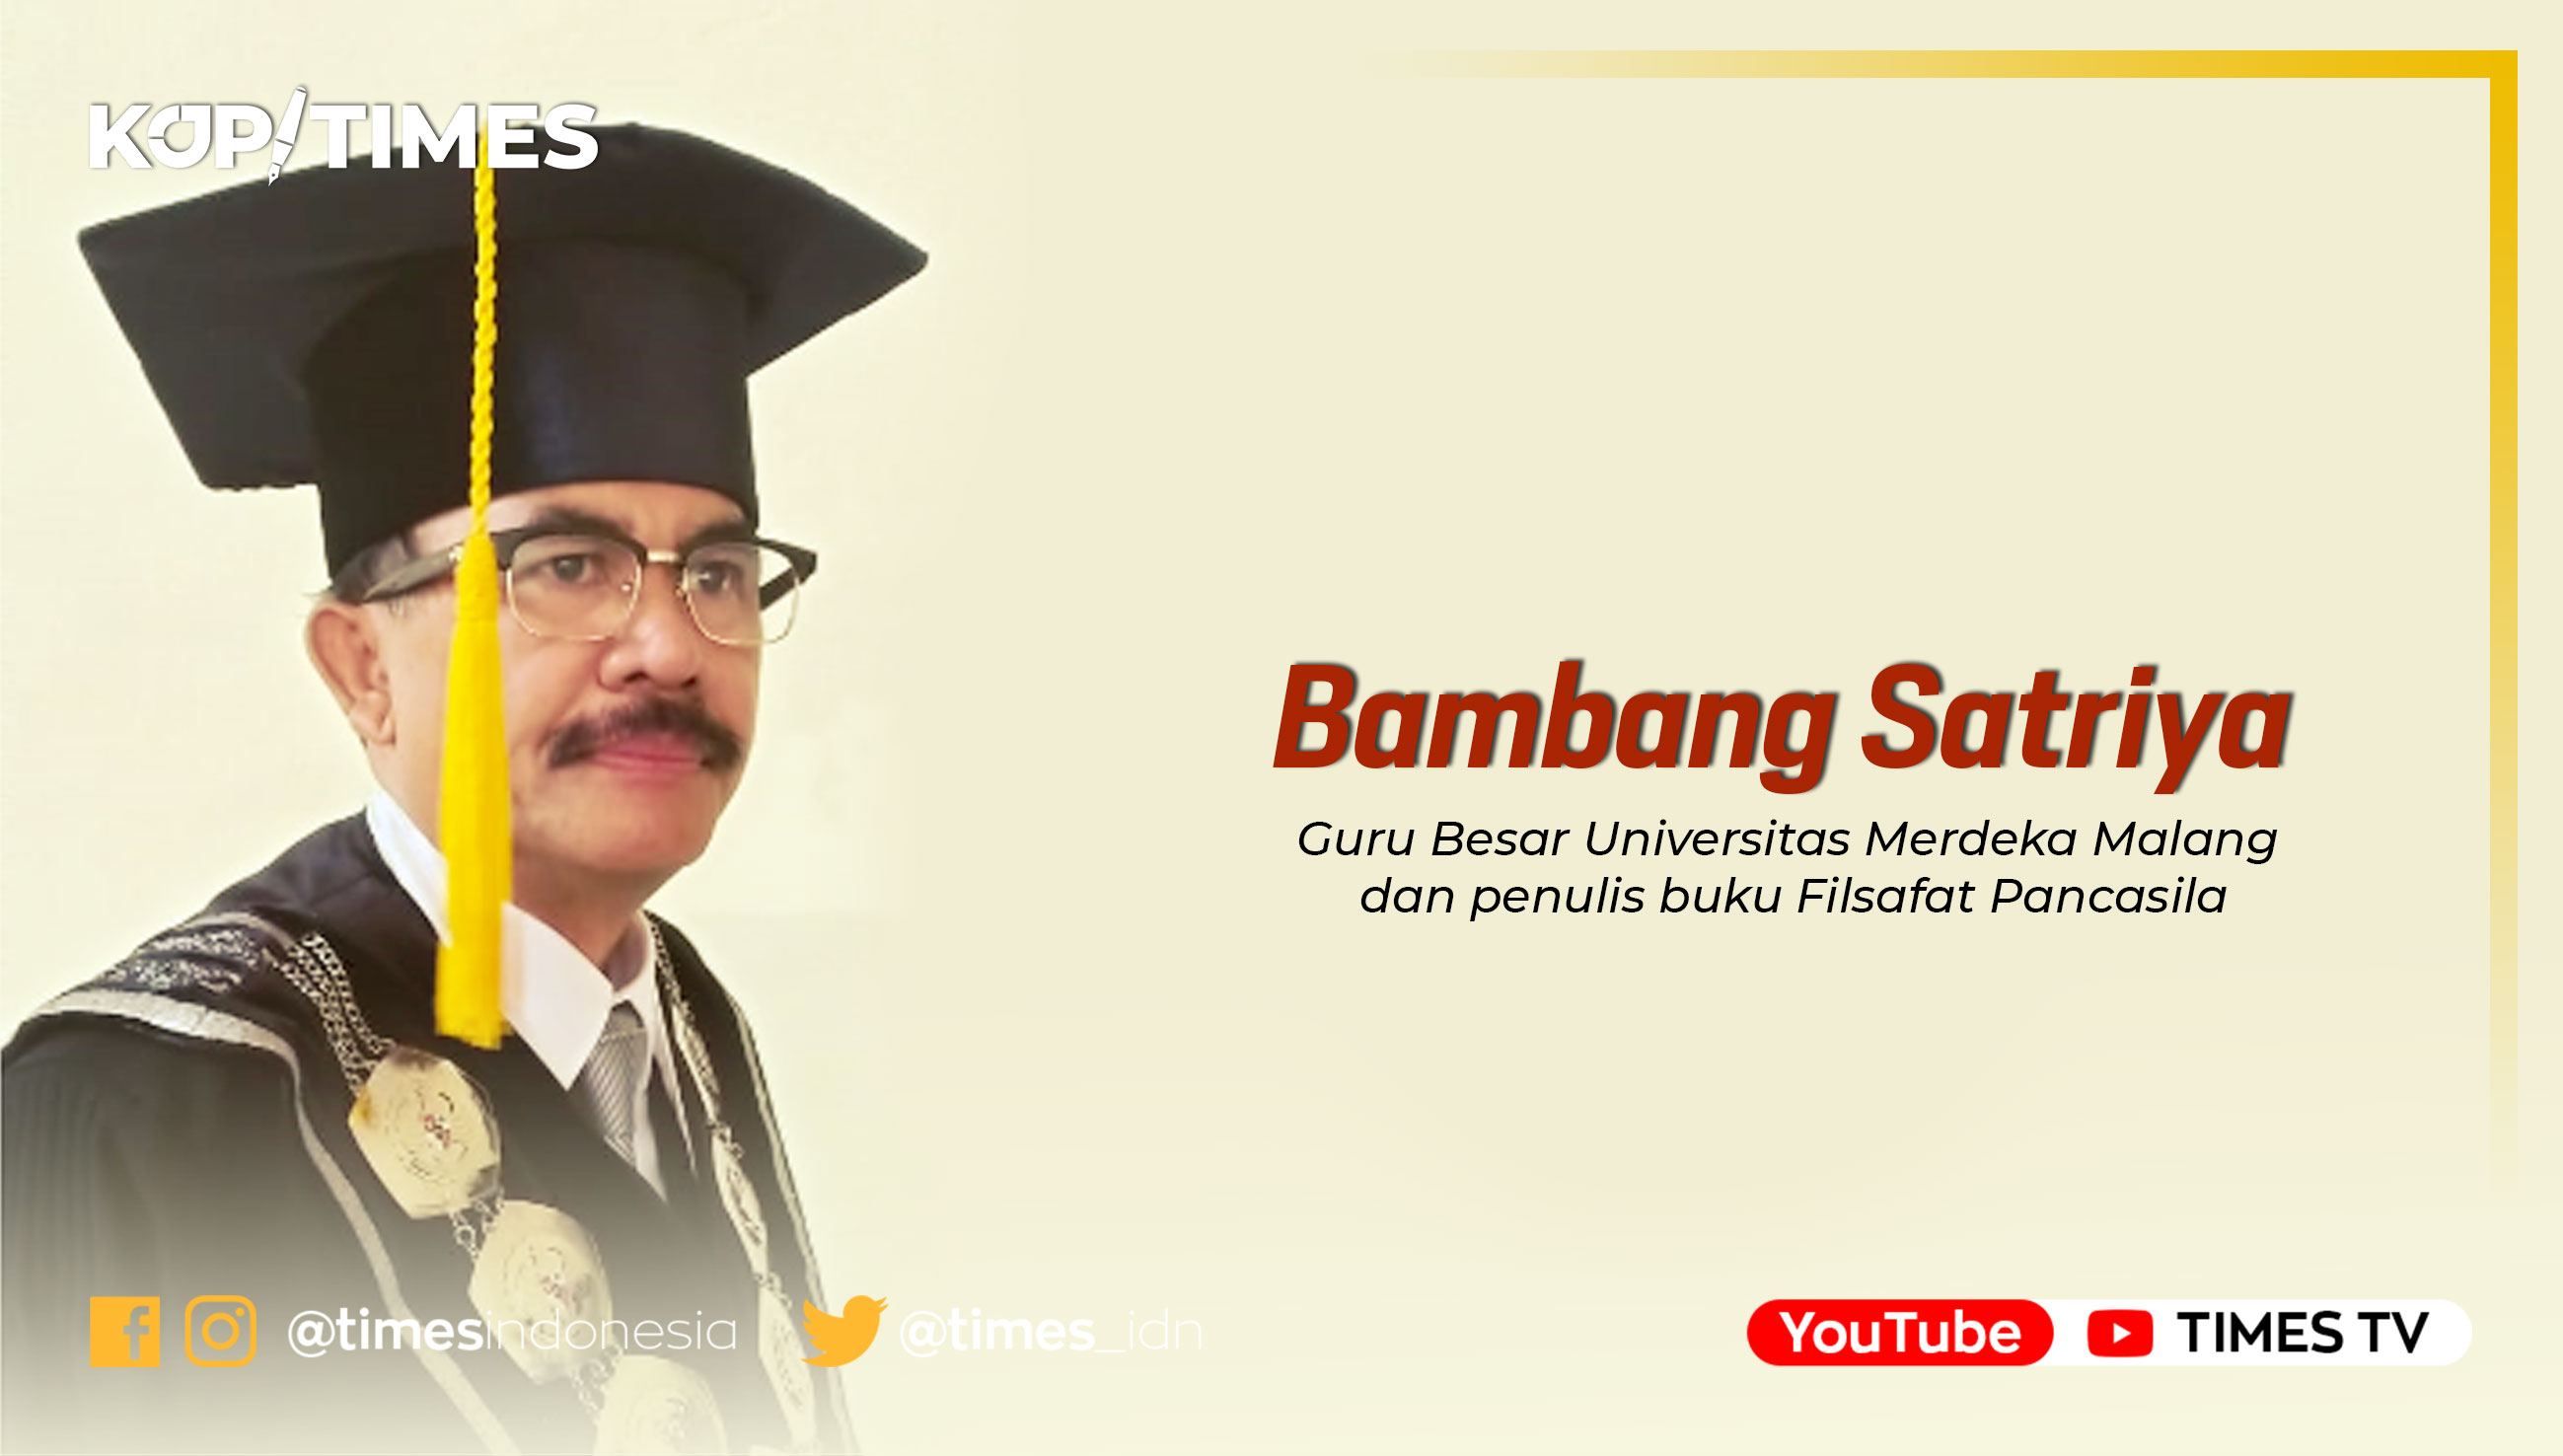 Bambang Satriya; Guru Besar Universitas Merdeka Malang dan penulis buku.